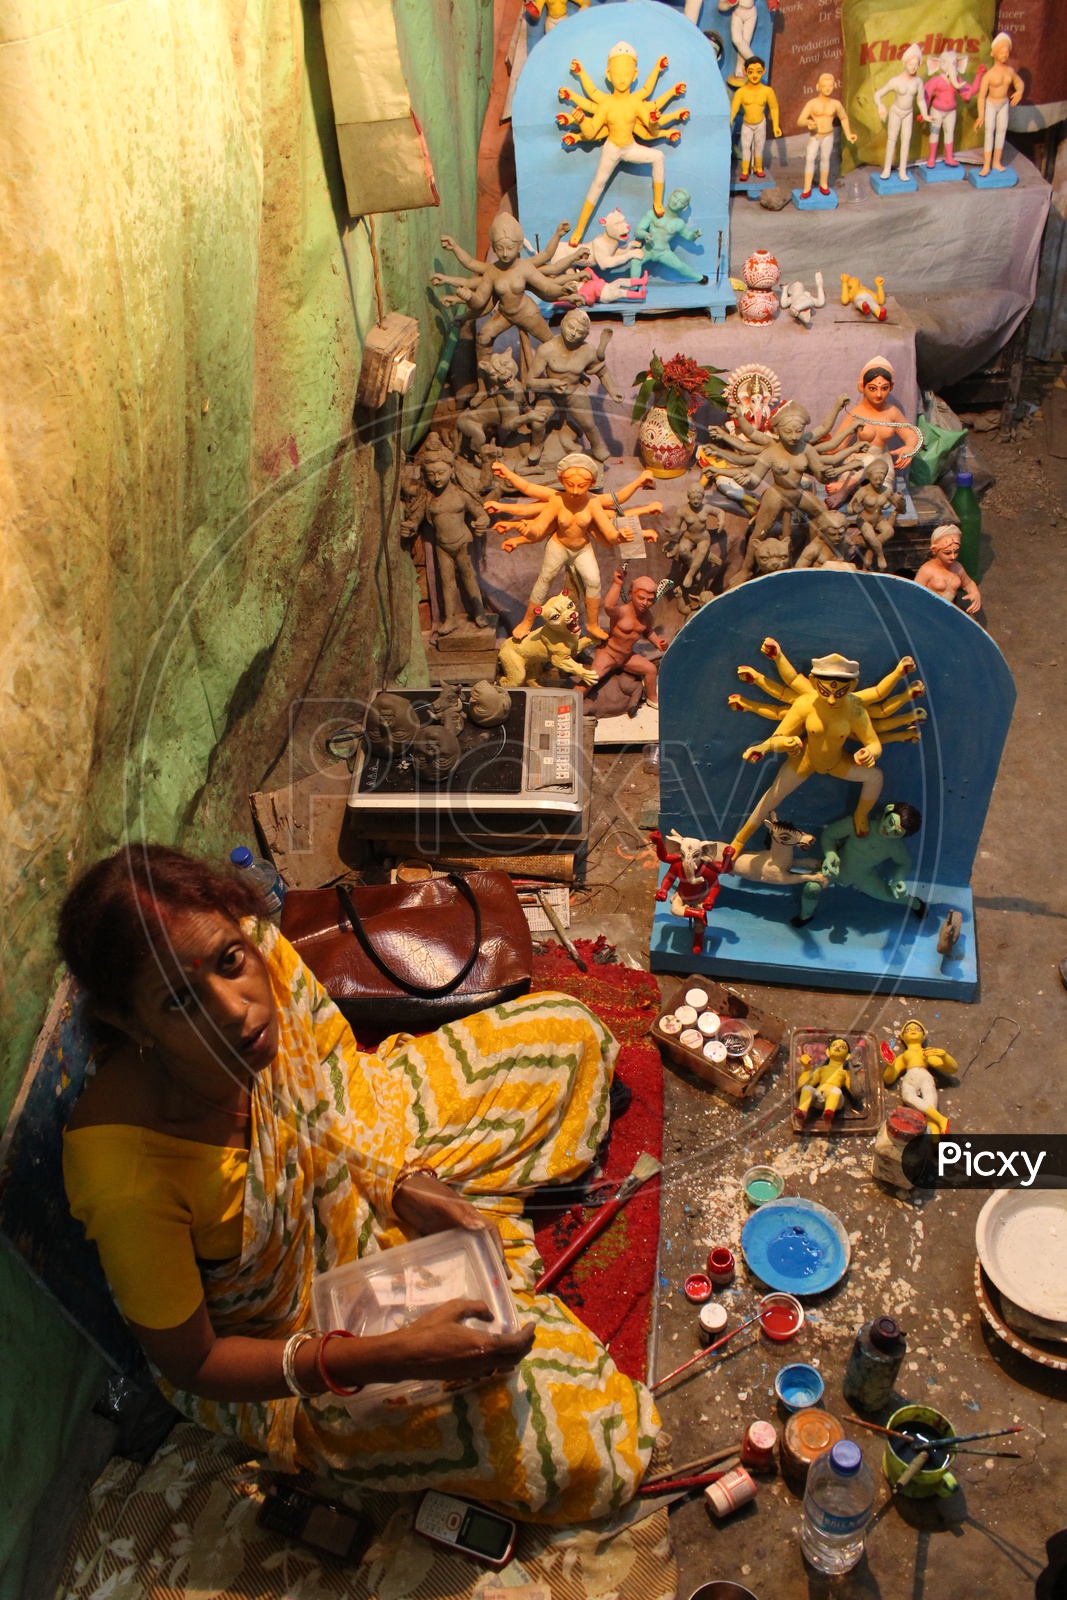 Idol maker before the Durga Puja approches in Kolkata.